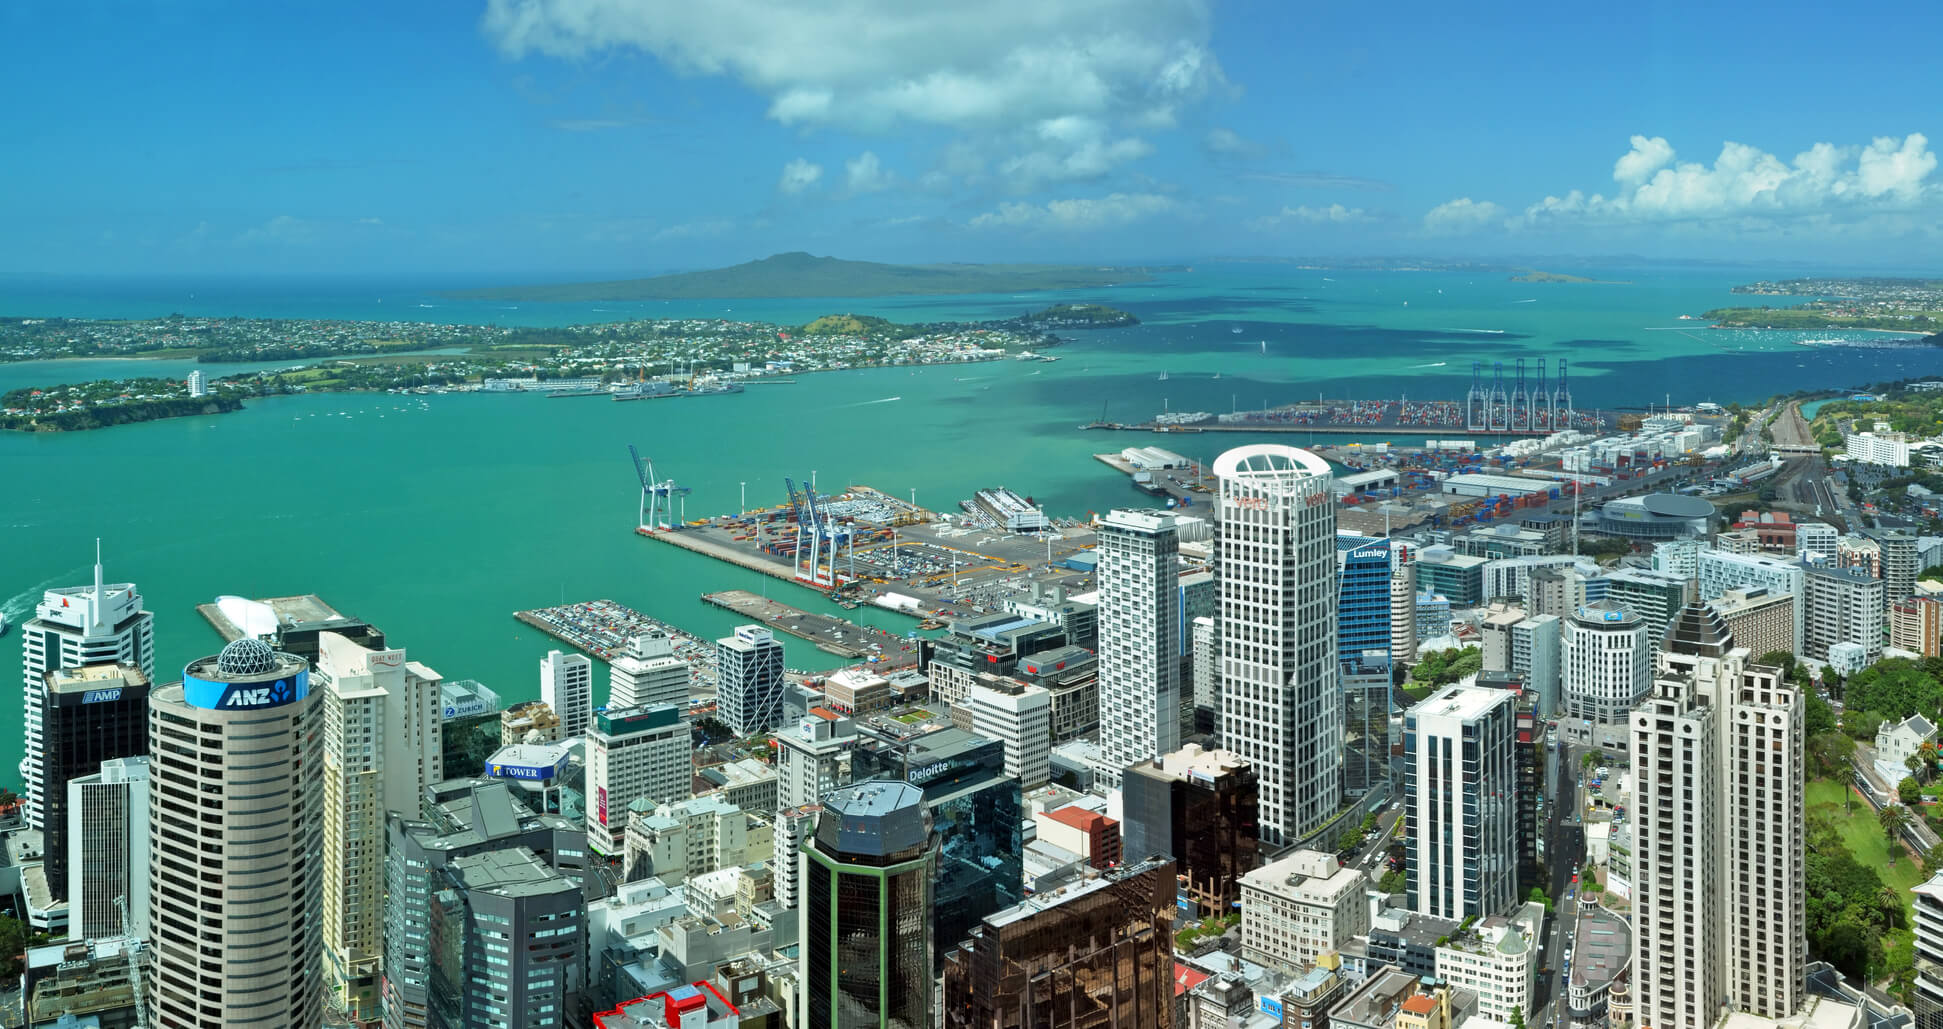 Flight deals from Vienna, Austria to Auckland, New Zealand | Secret Flying